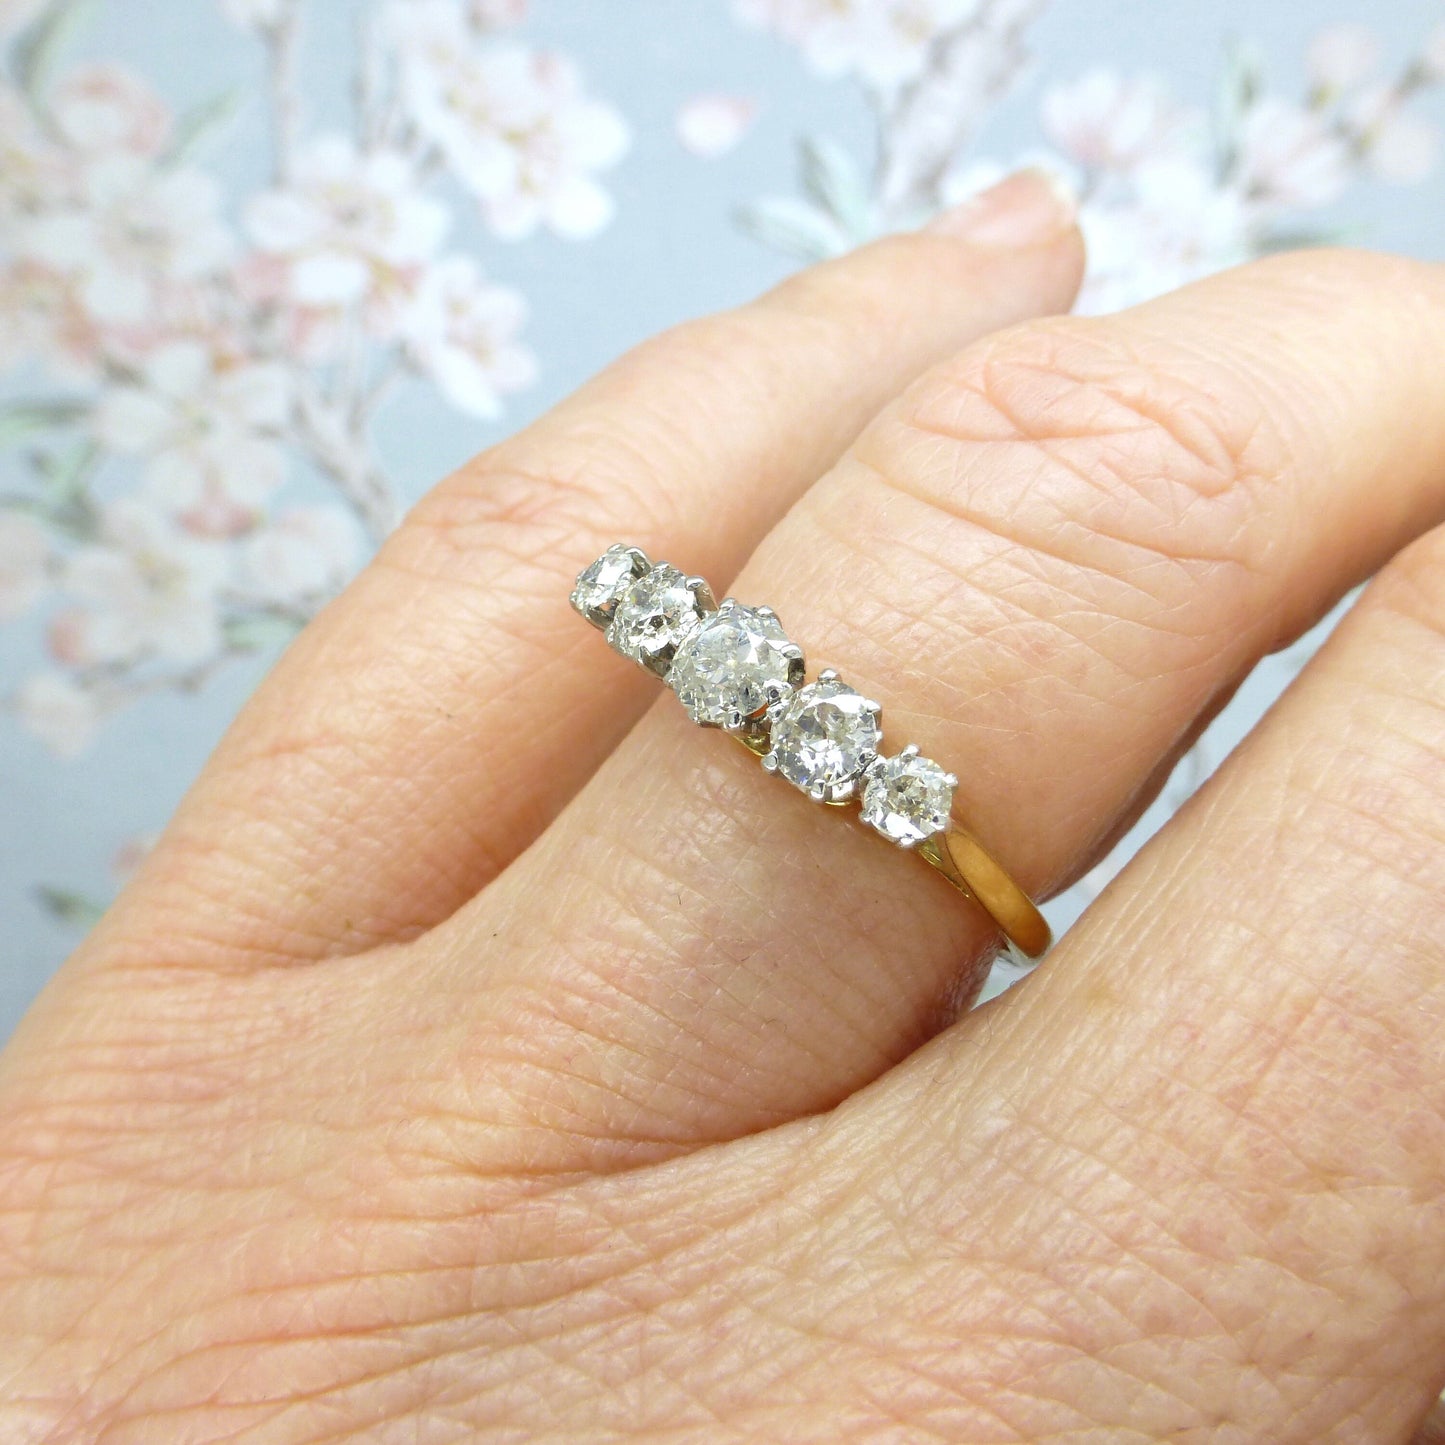 Antique Edwardian 18ct Platinum old European cut diamond five stone ring ~ Eternity wedding band